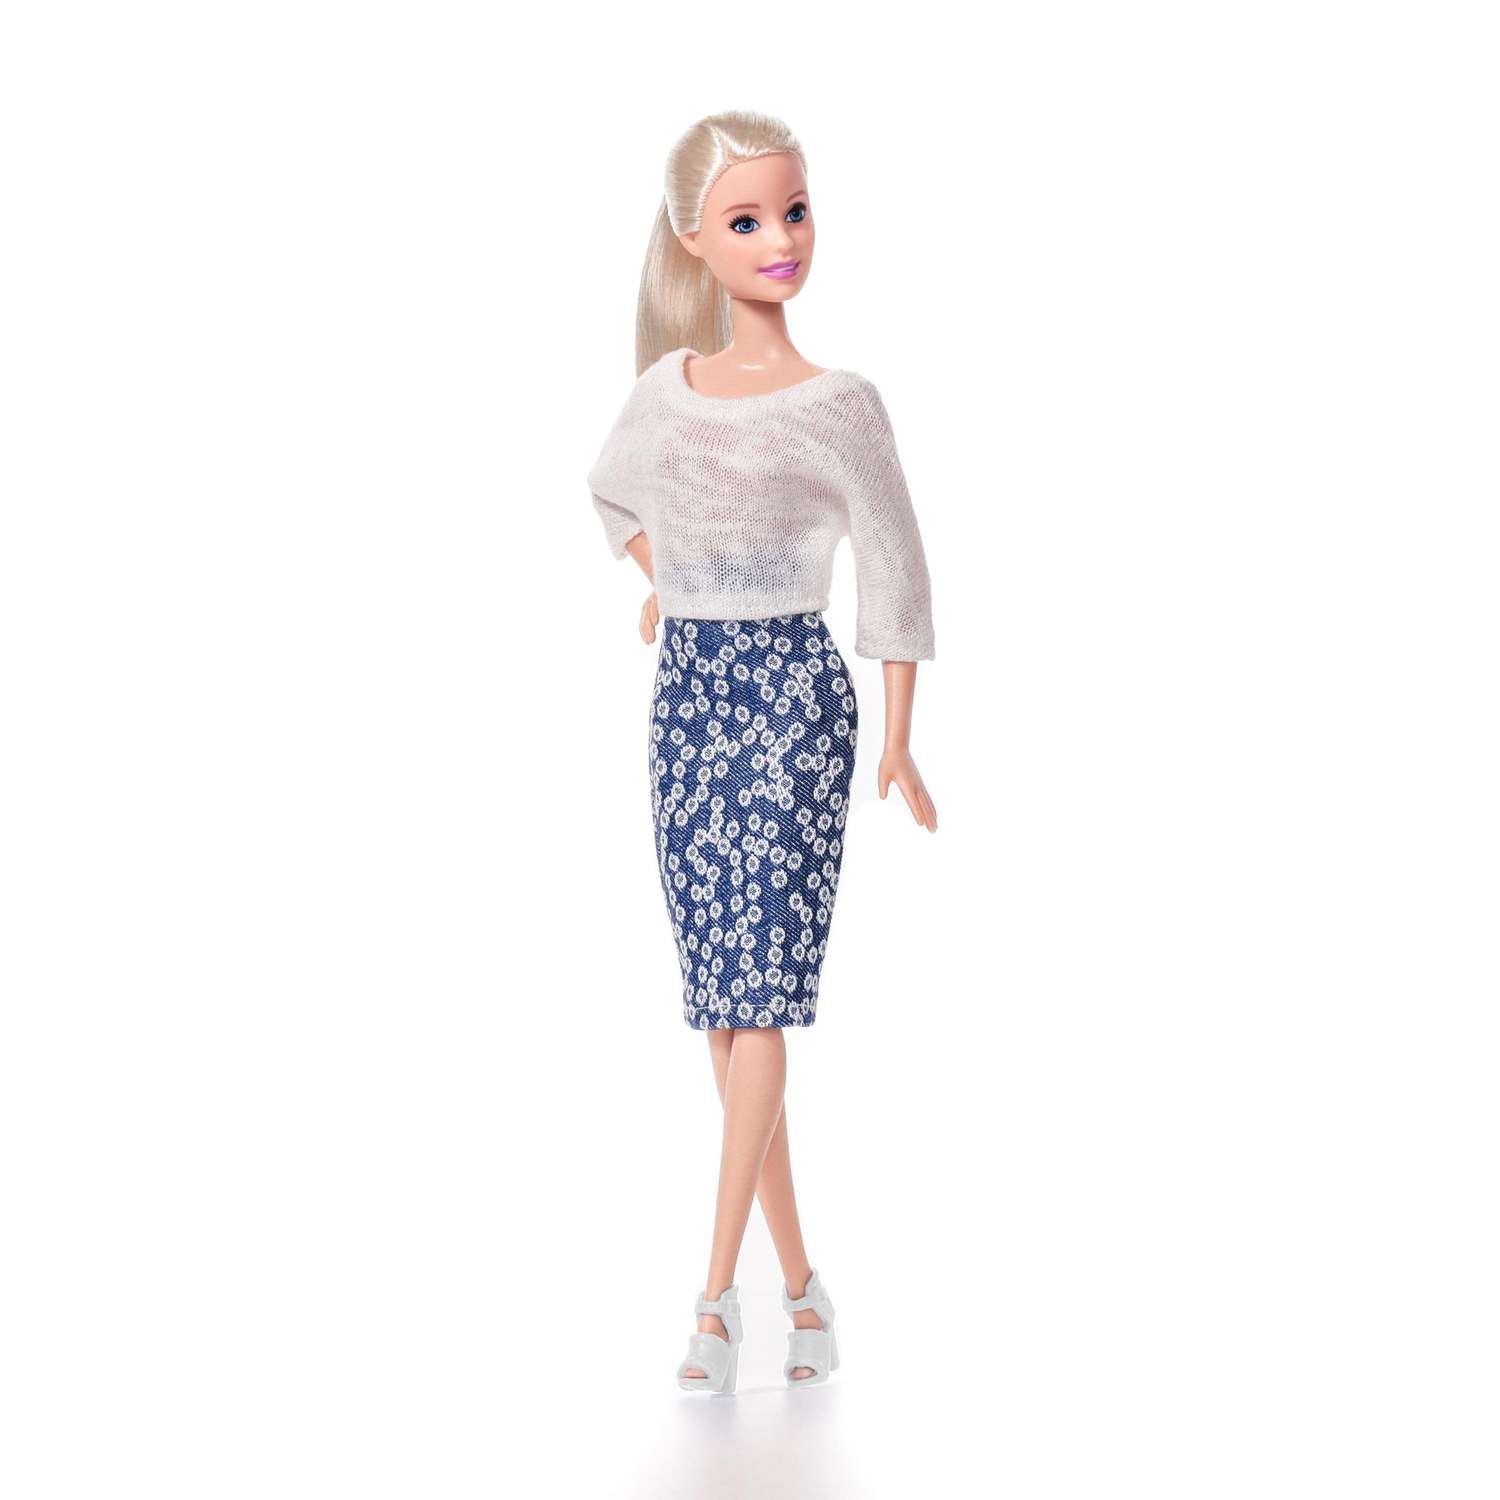 Одежда для кукол типа Барби VIANA свитер и юбка 2 предмета молочно-синий 11.113.11 - фото 2